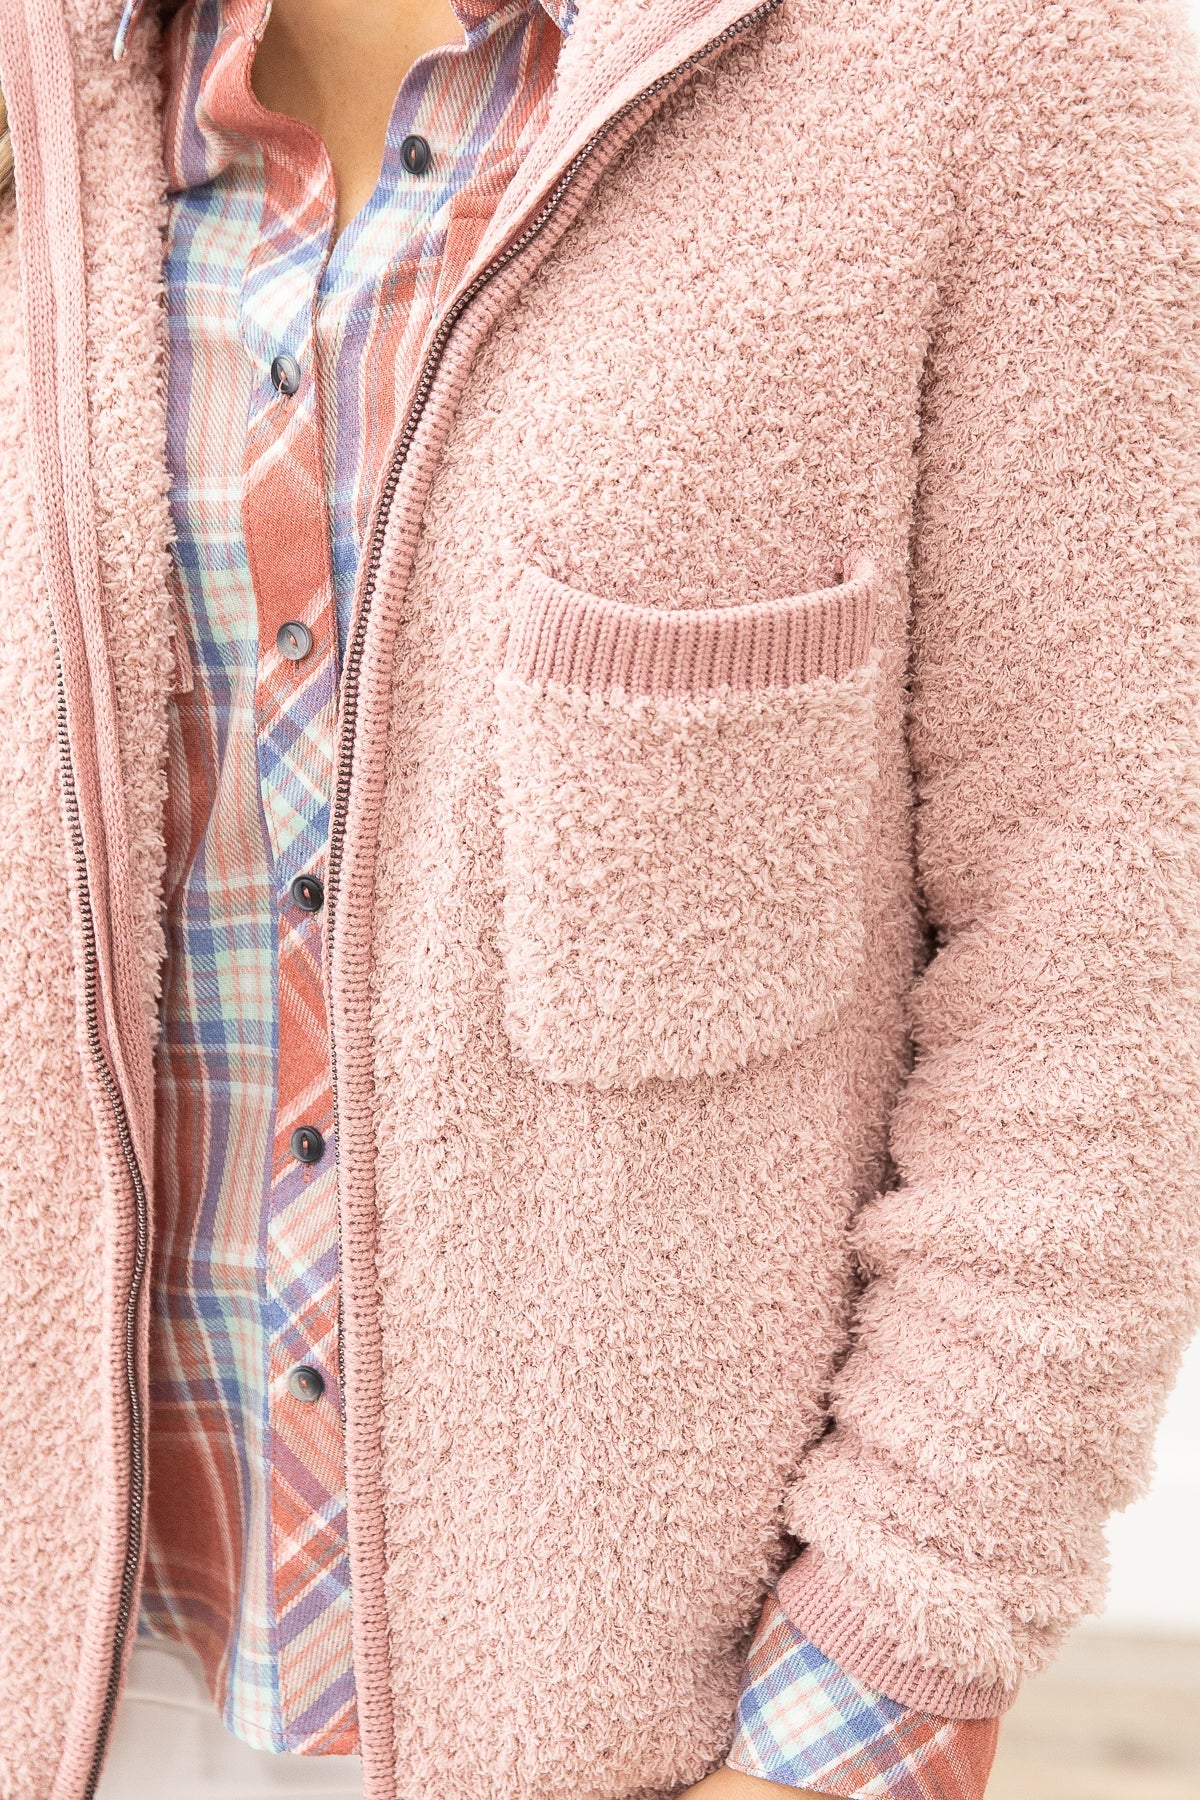 Blush Teddy Bear Fleece Full Zip Jacket Sweater - Filly Flair